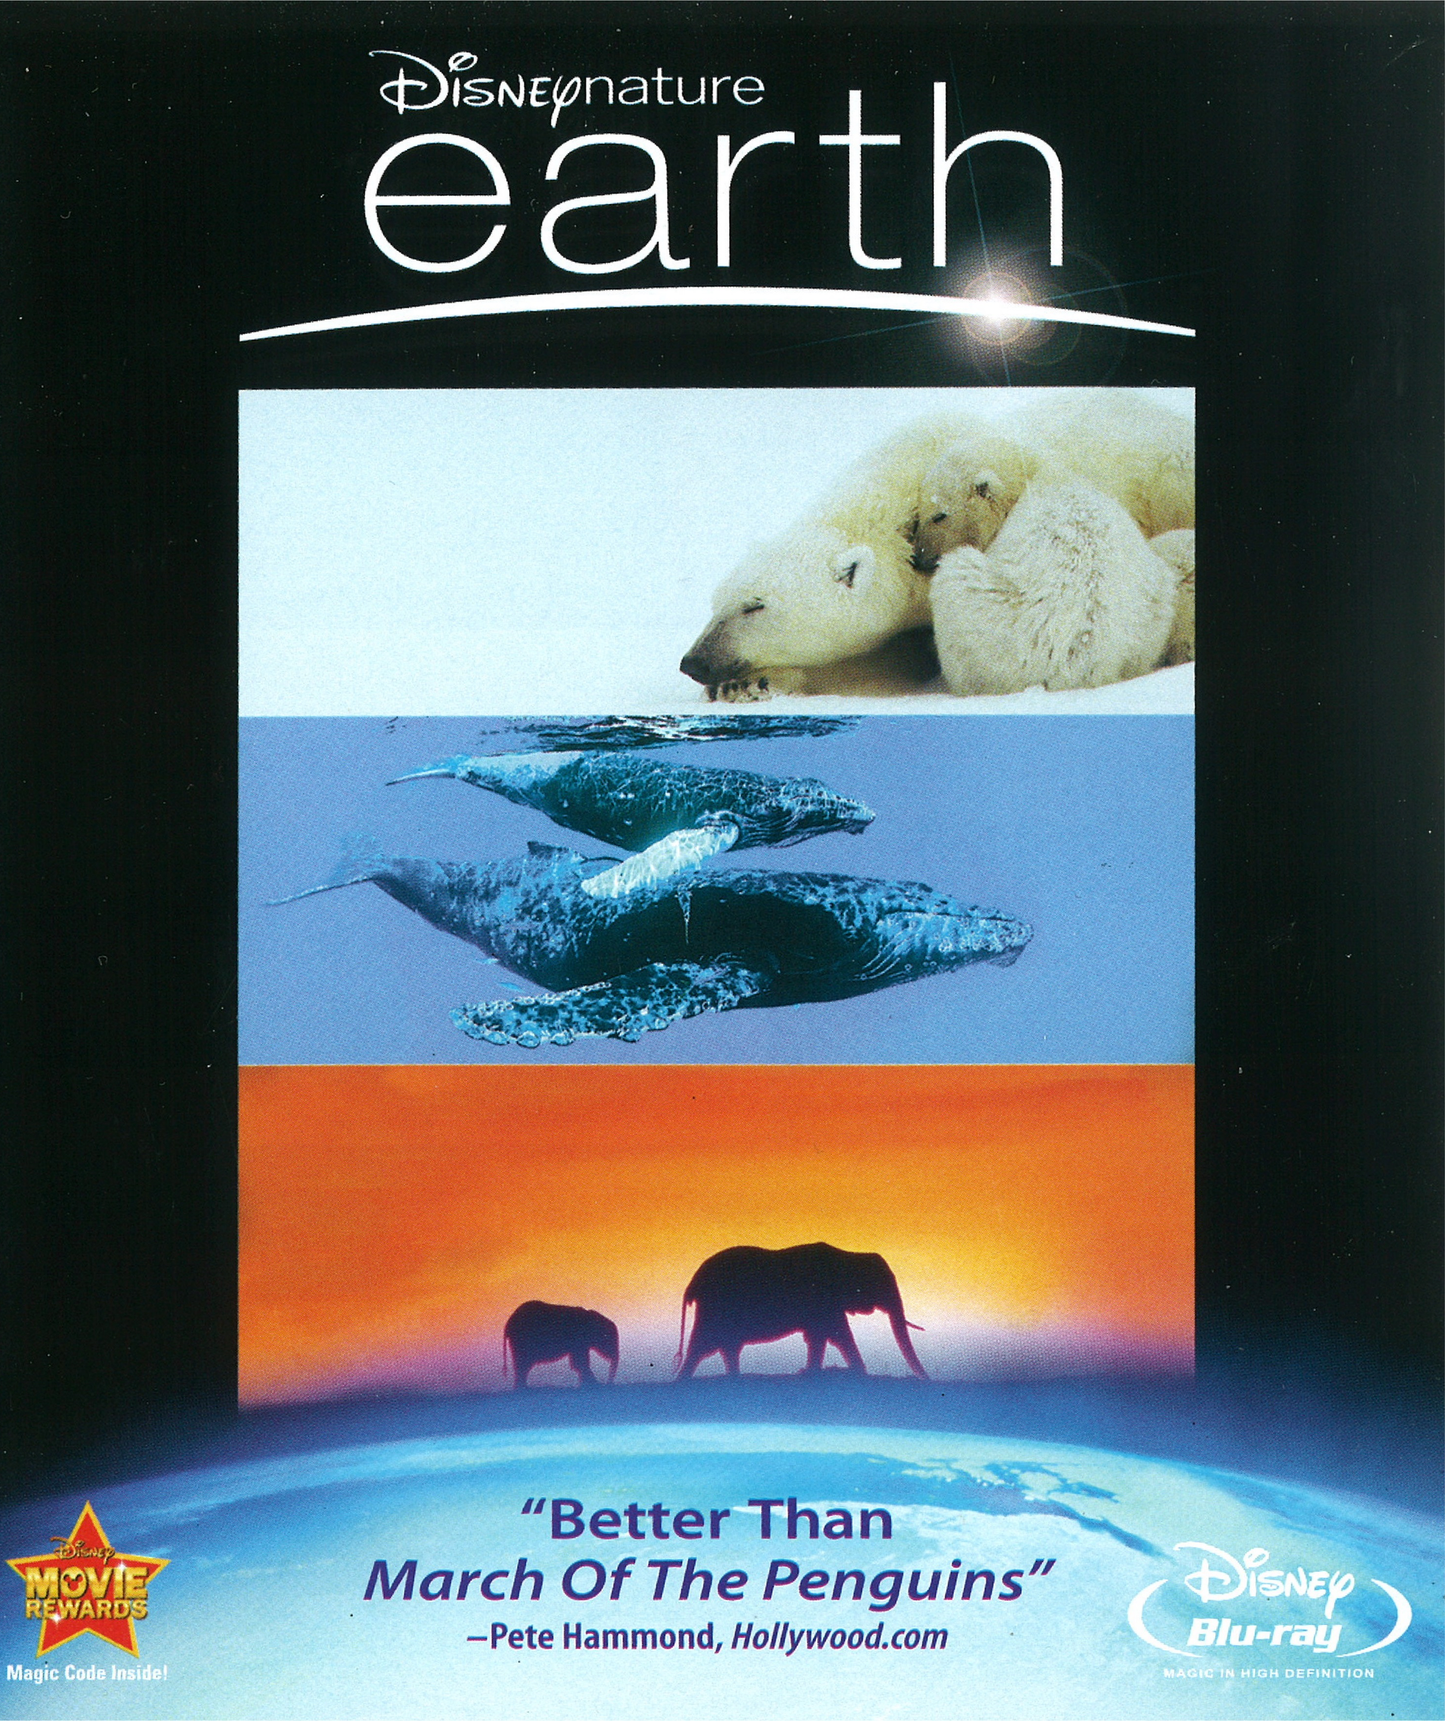 Disneynature: Earth - Blu-ray Documentary 2007 G